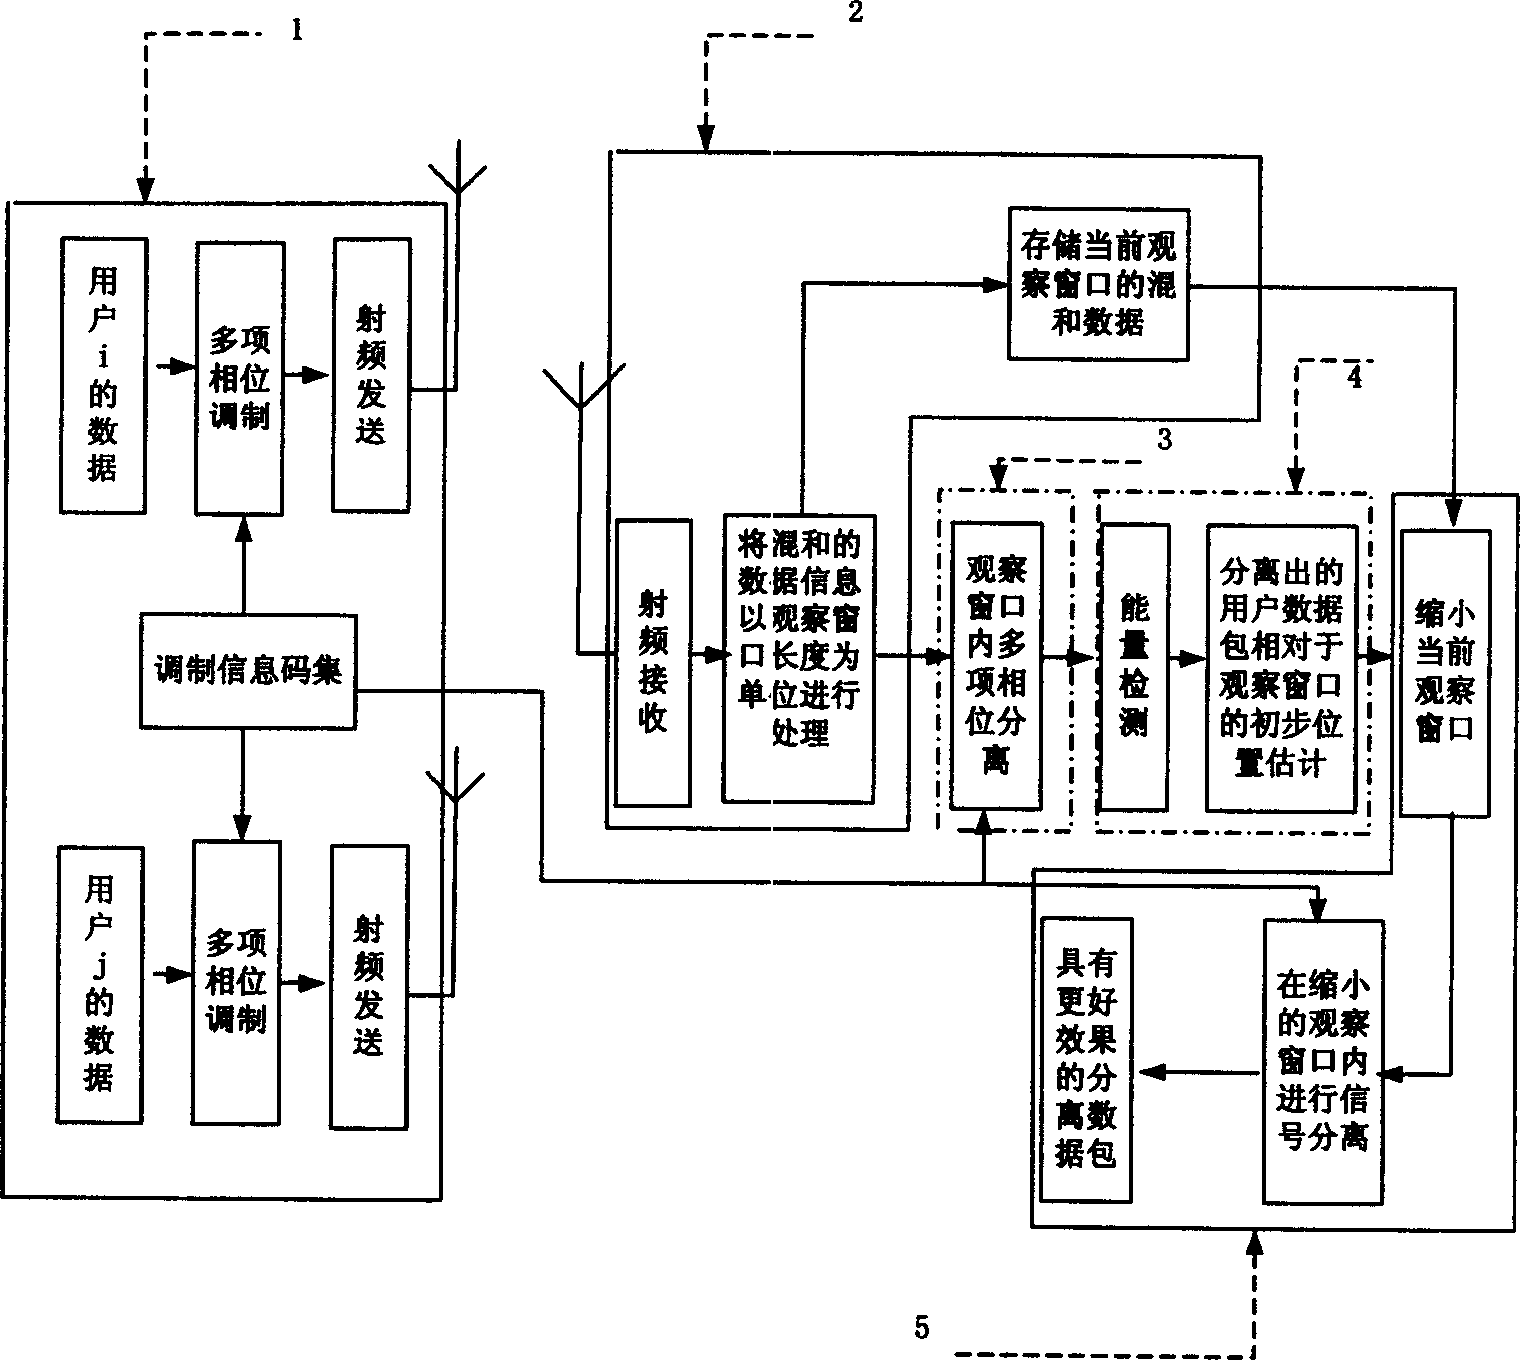 Multi-packet separating method in radio self-organization network